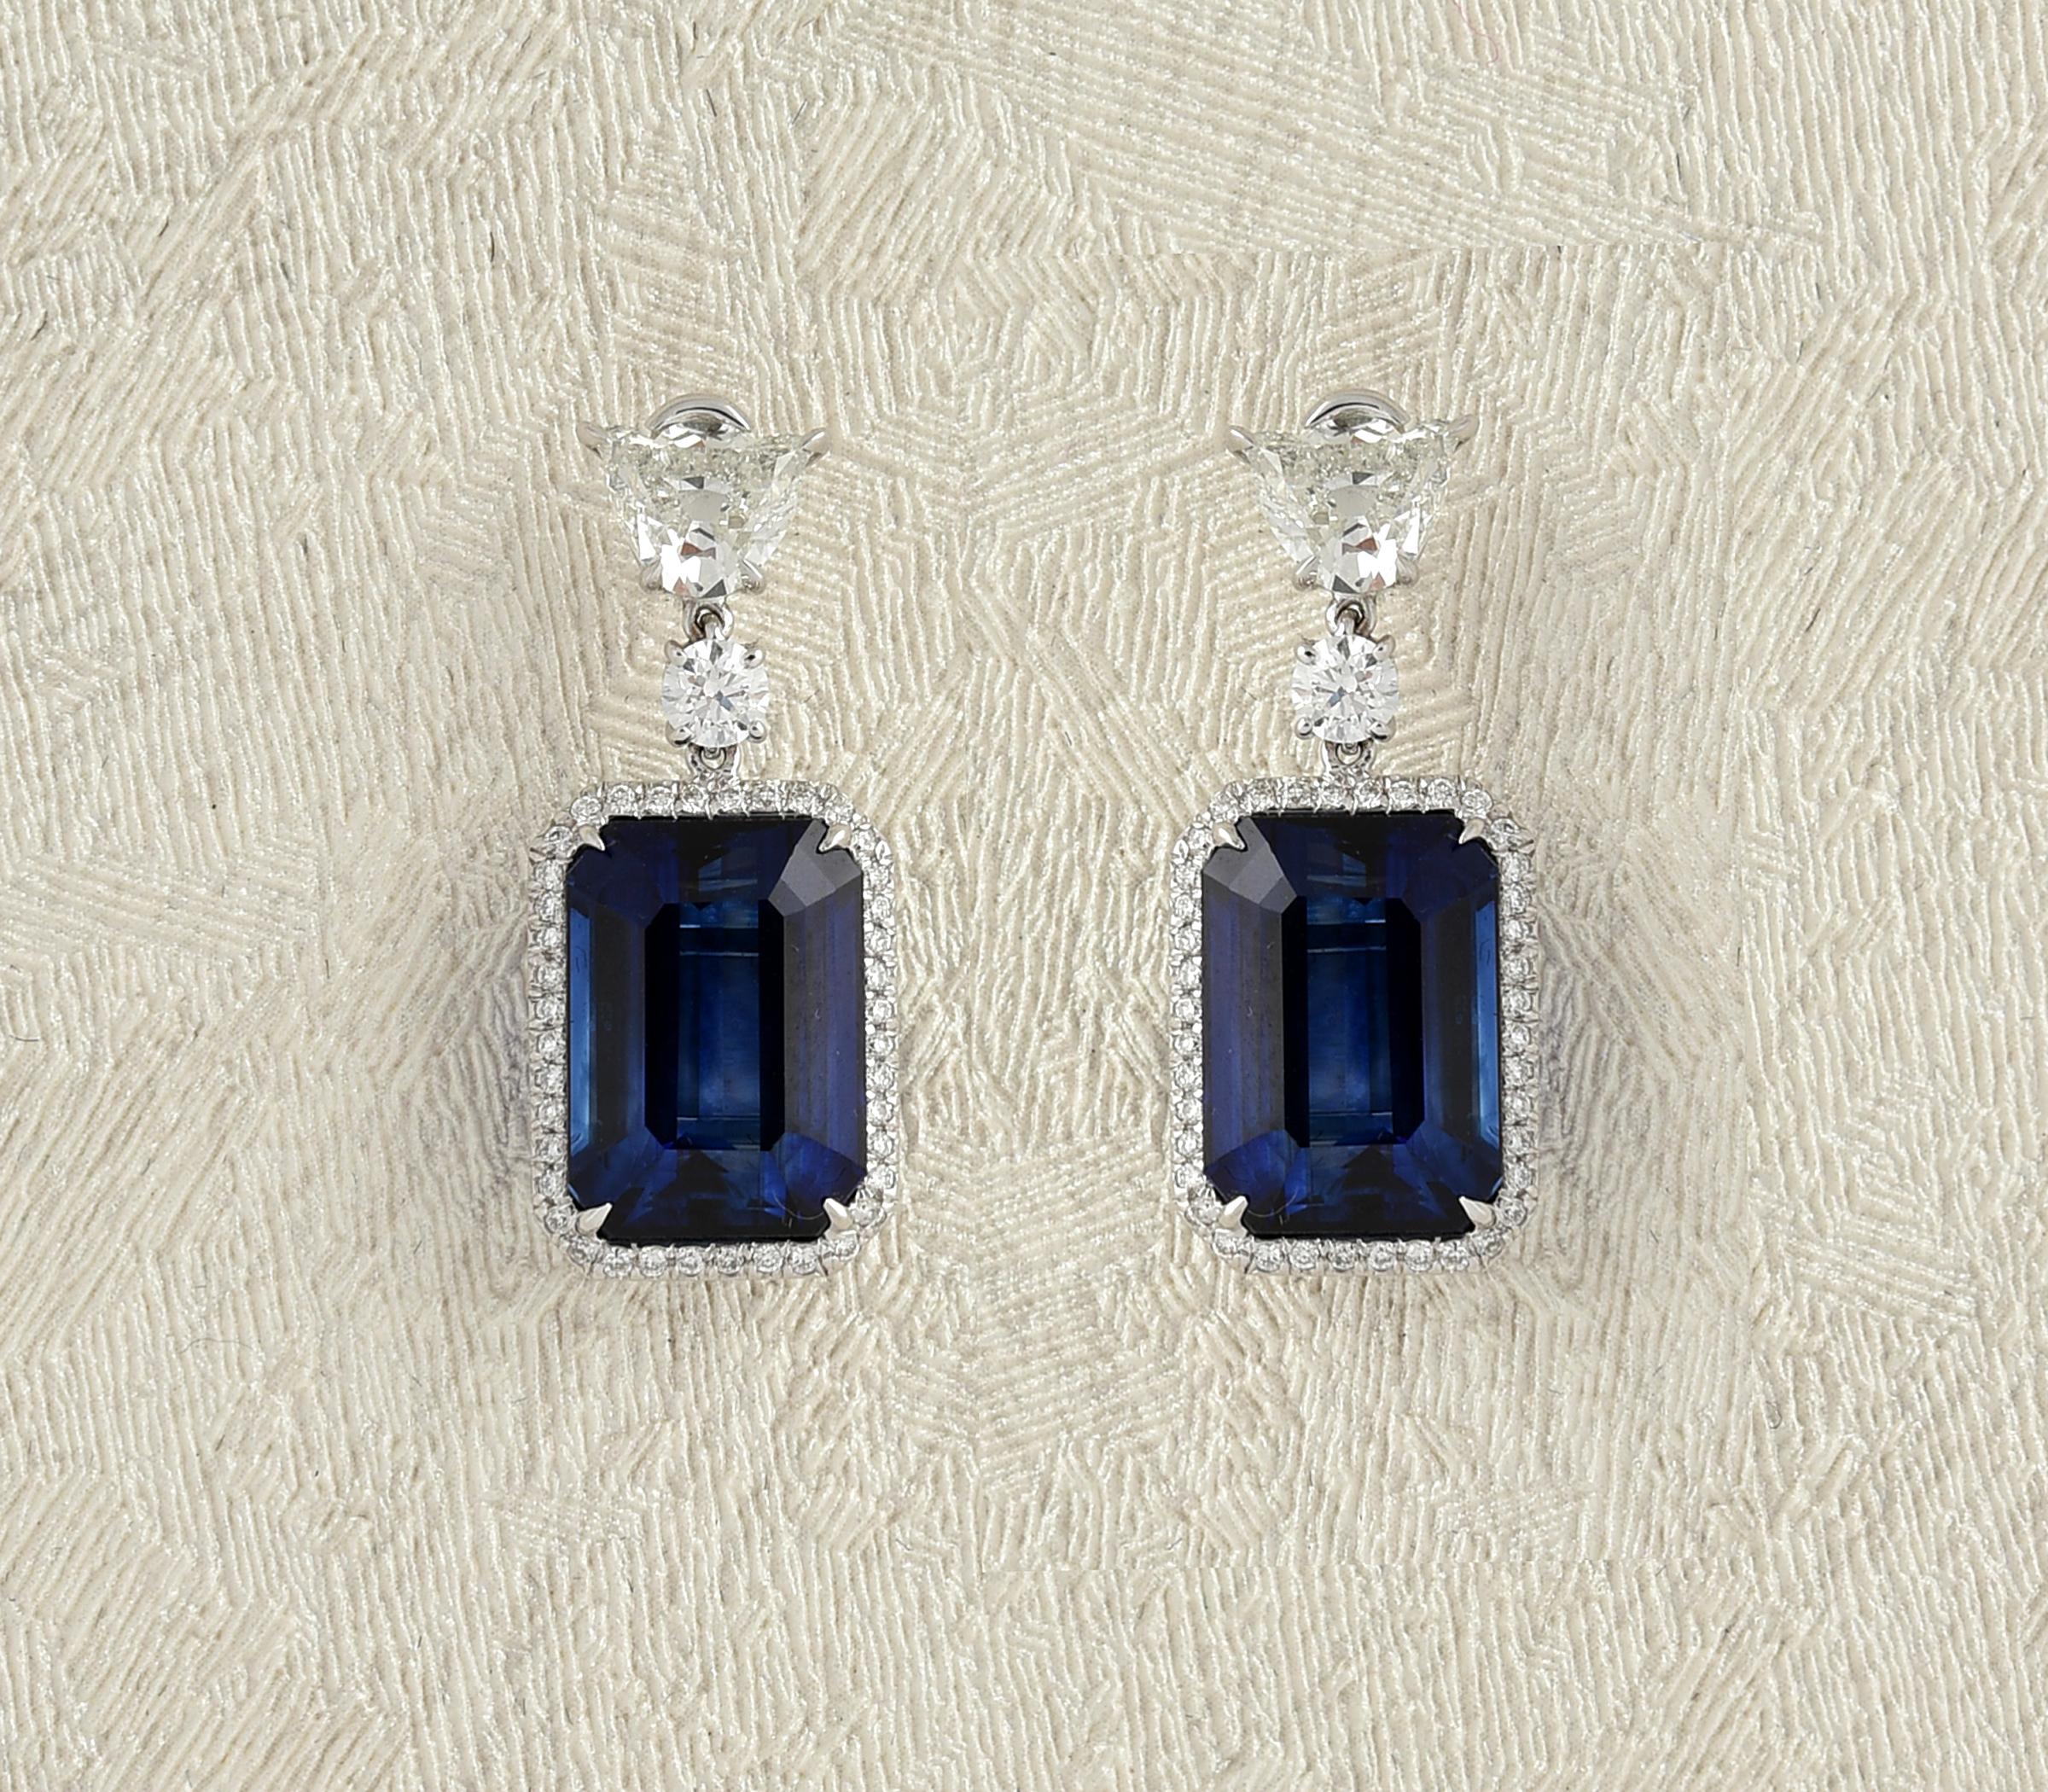 Laviere 15.97 Carat Blue Sapphire and Diamond Earrings In New Condition For Sale In Dubai, Dubai